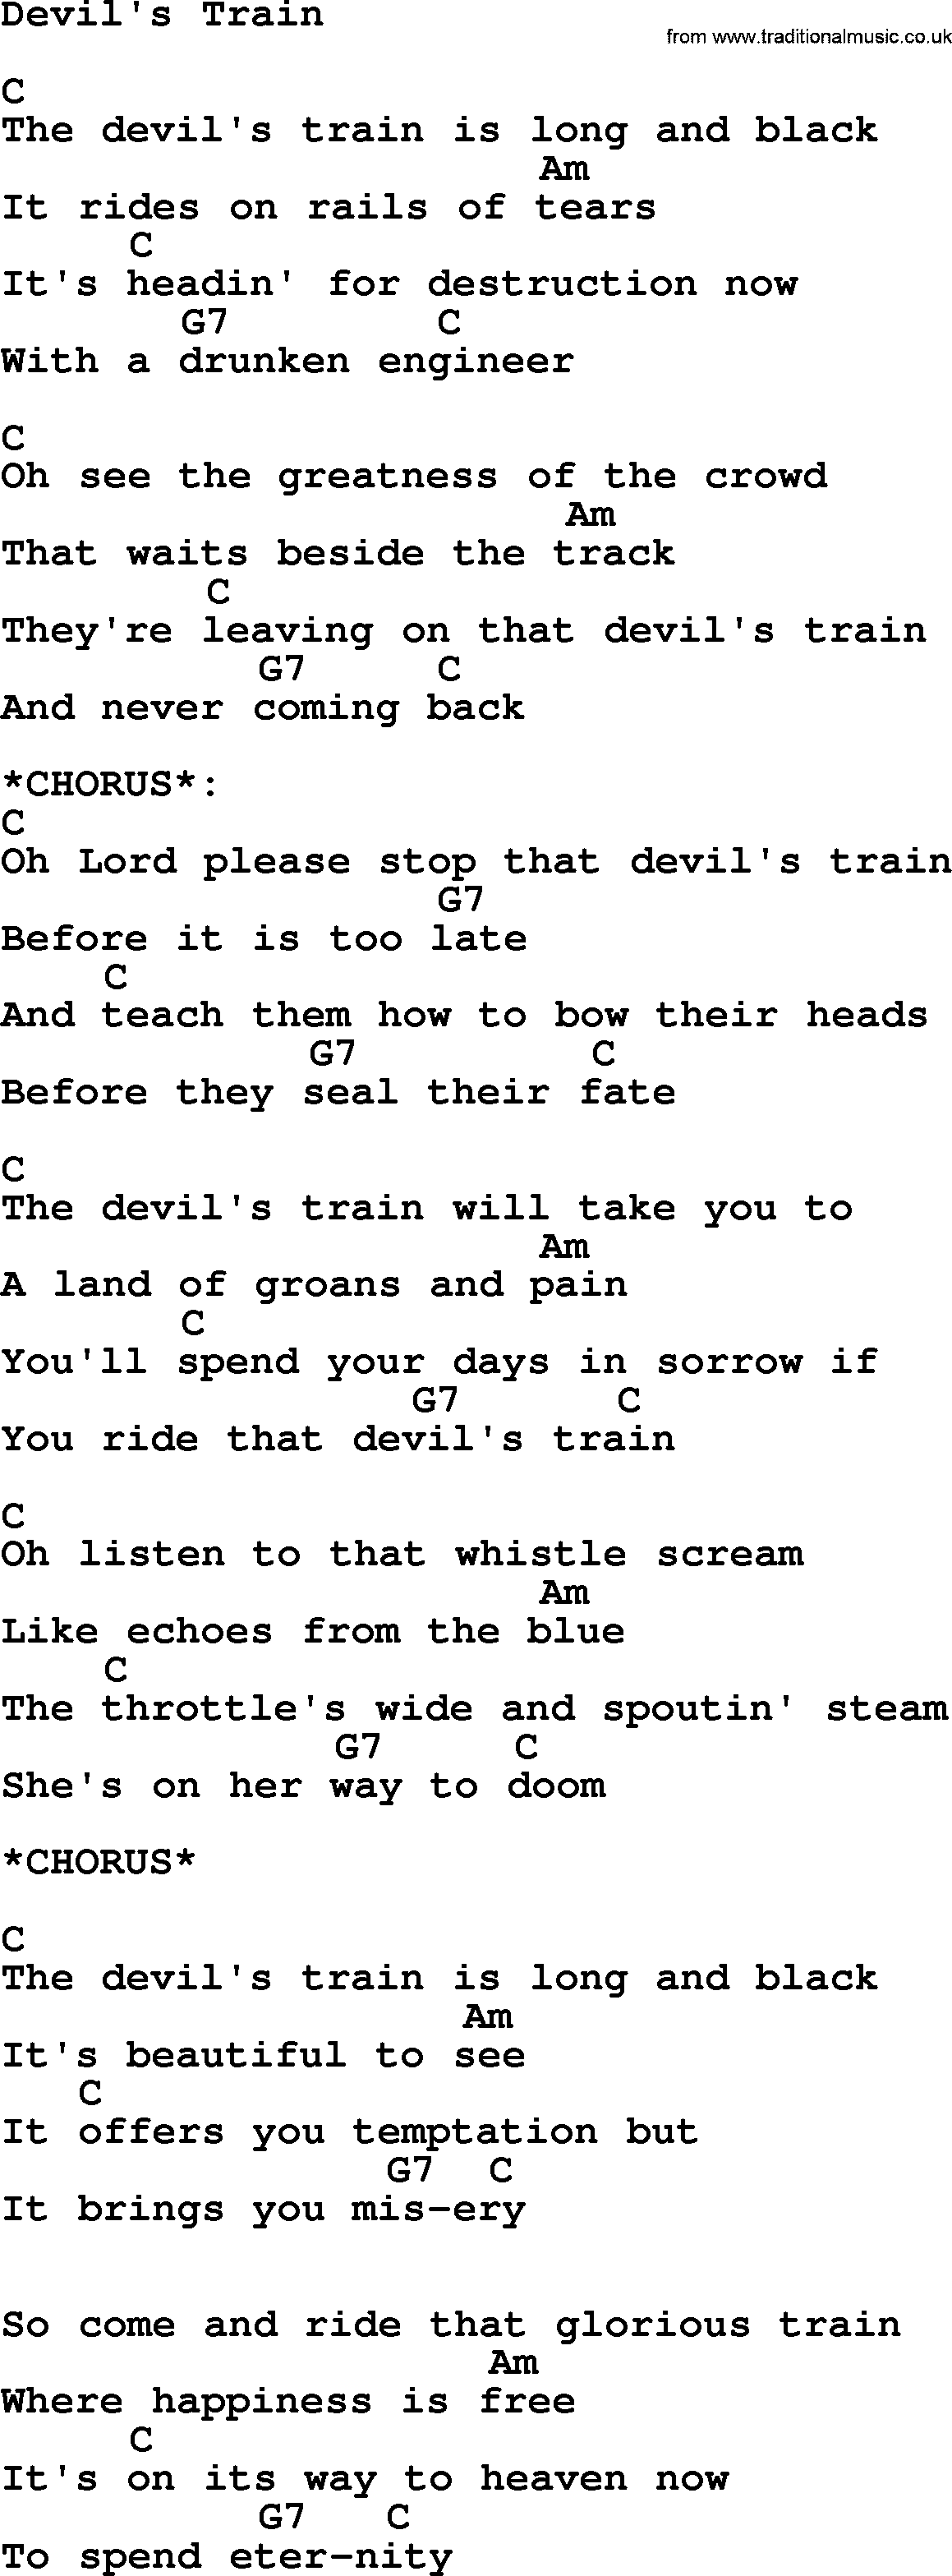 Hank Williams song Devil's Train, lyrics and chords